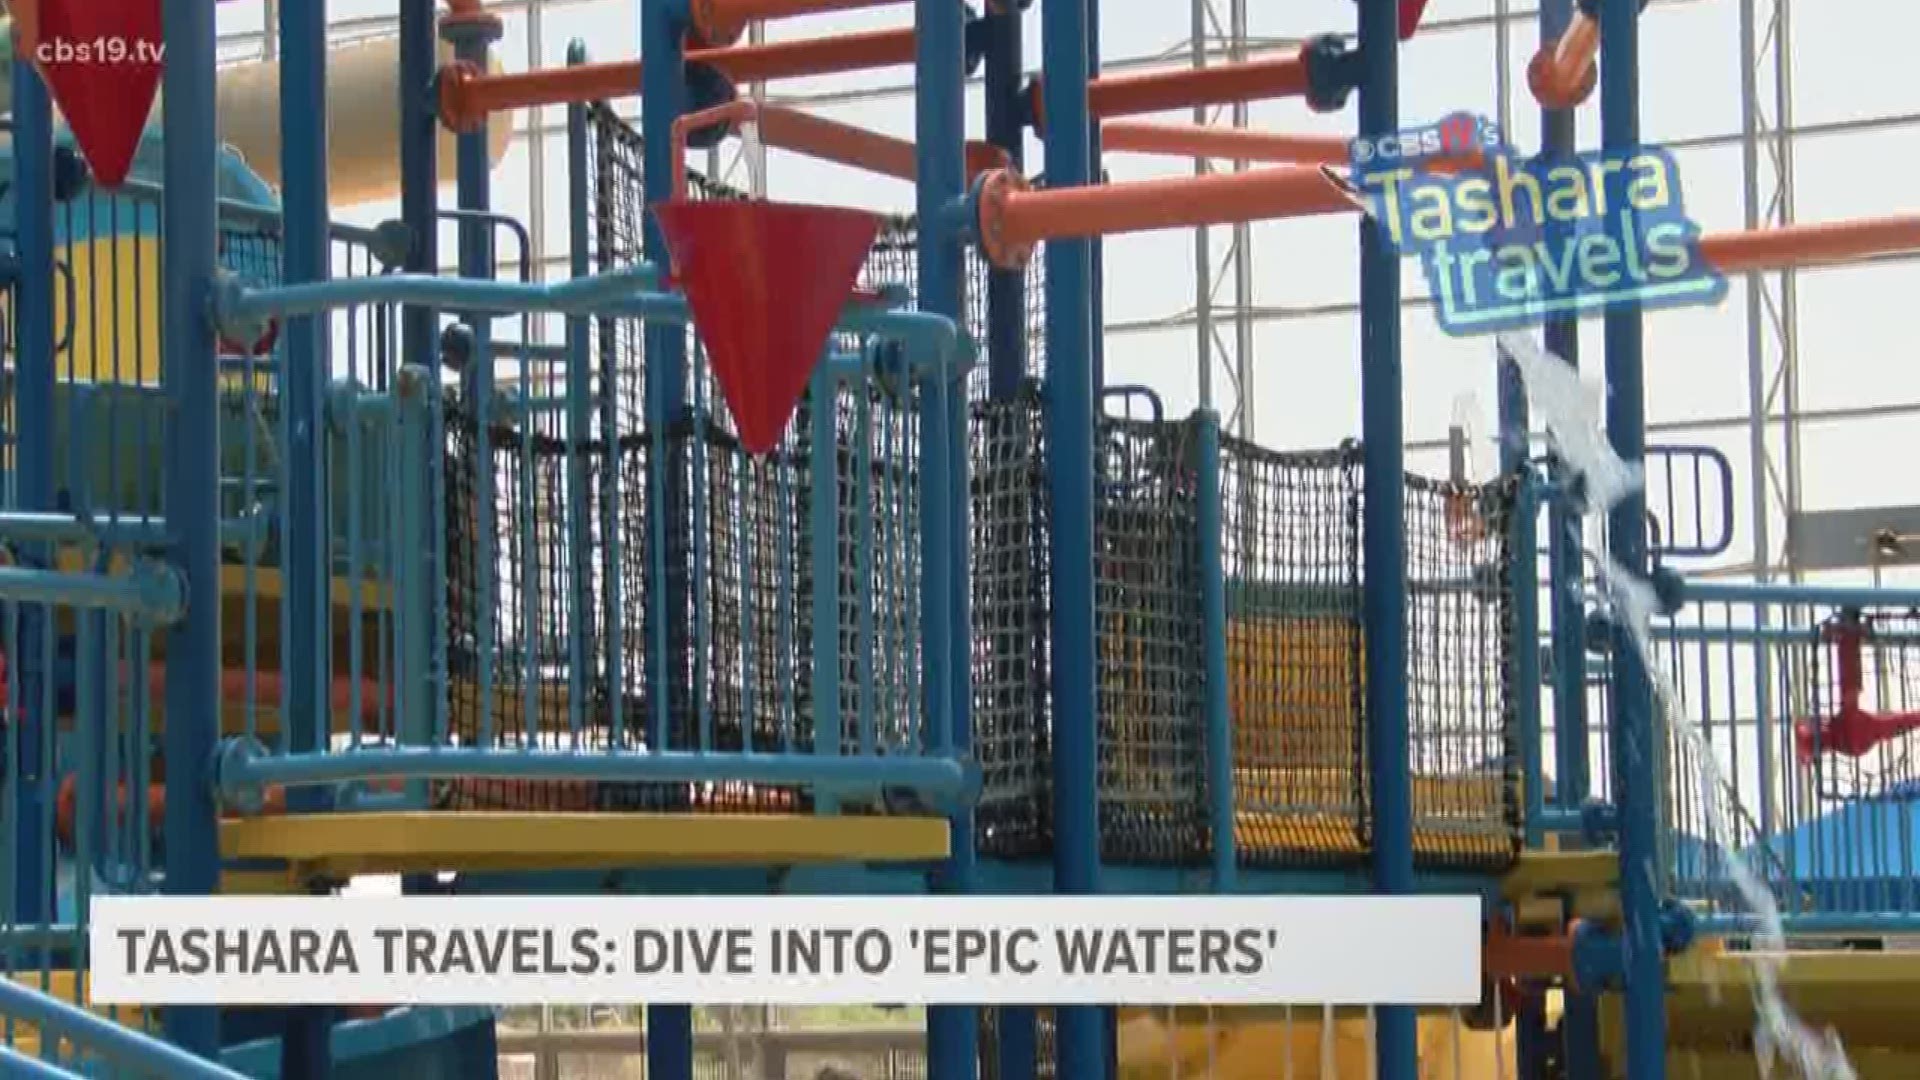 TASHARA TRAVELS: DIVE INTO 'EPIC WATERS'